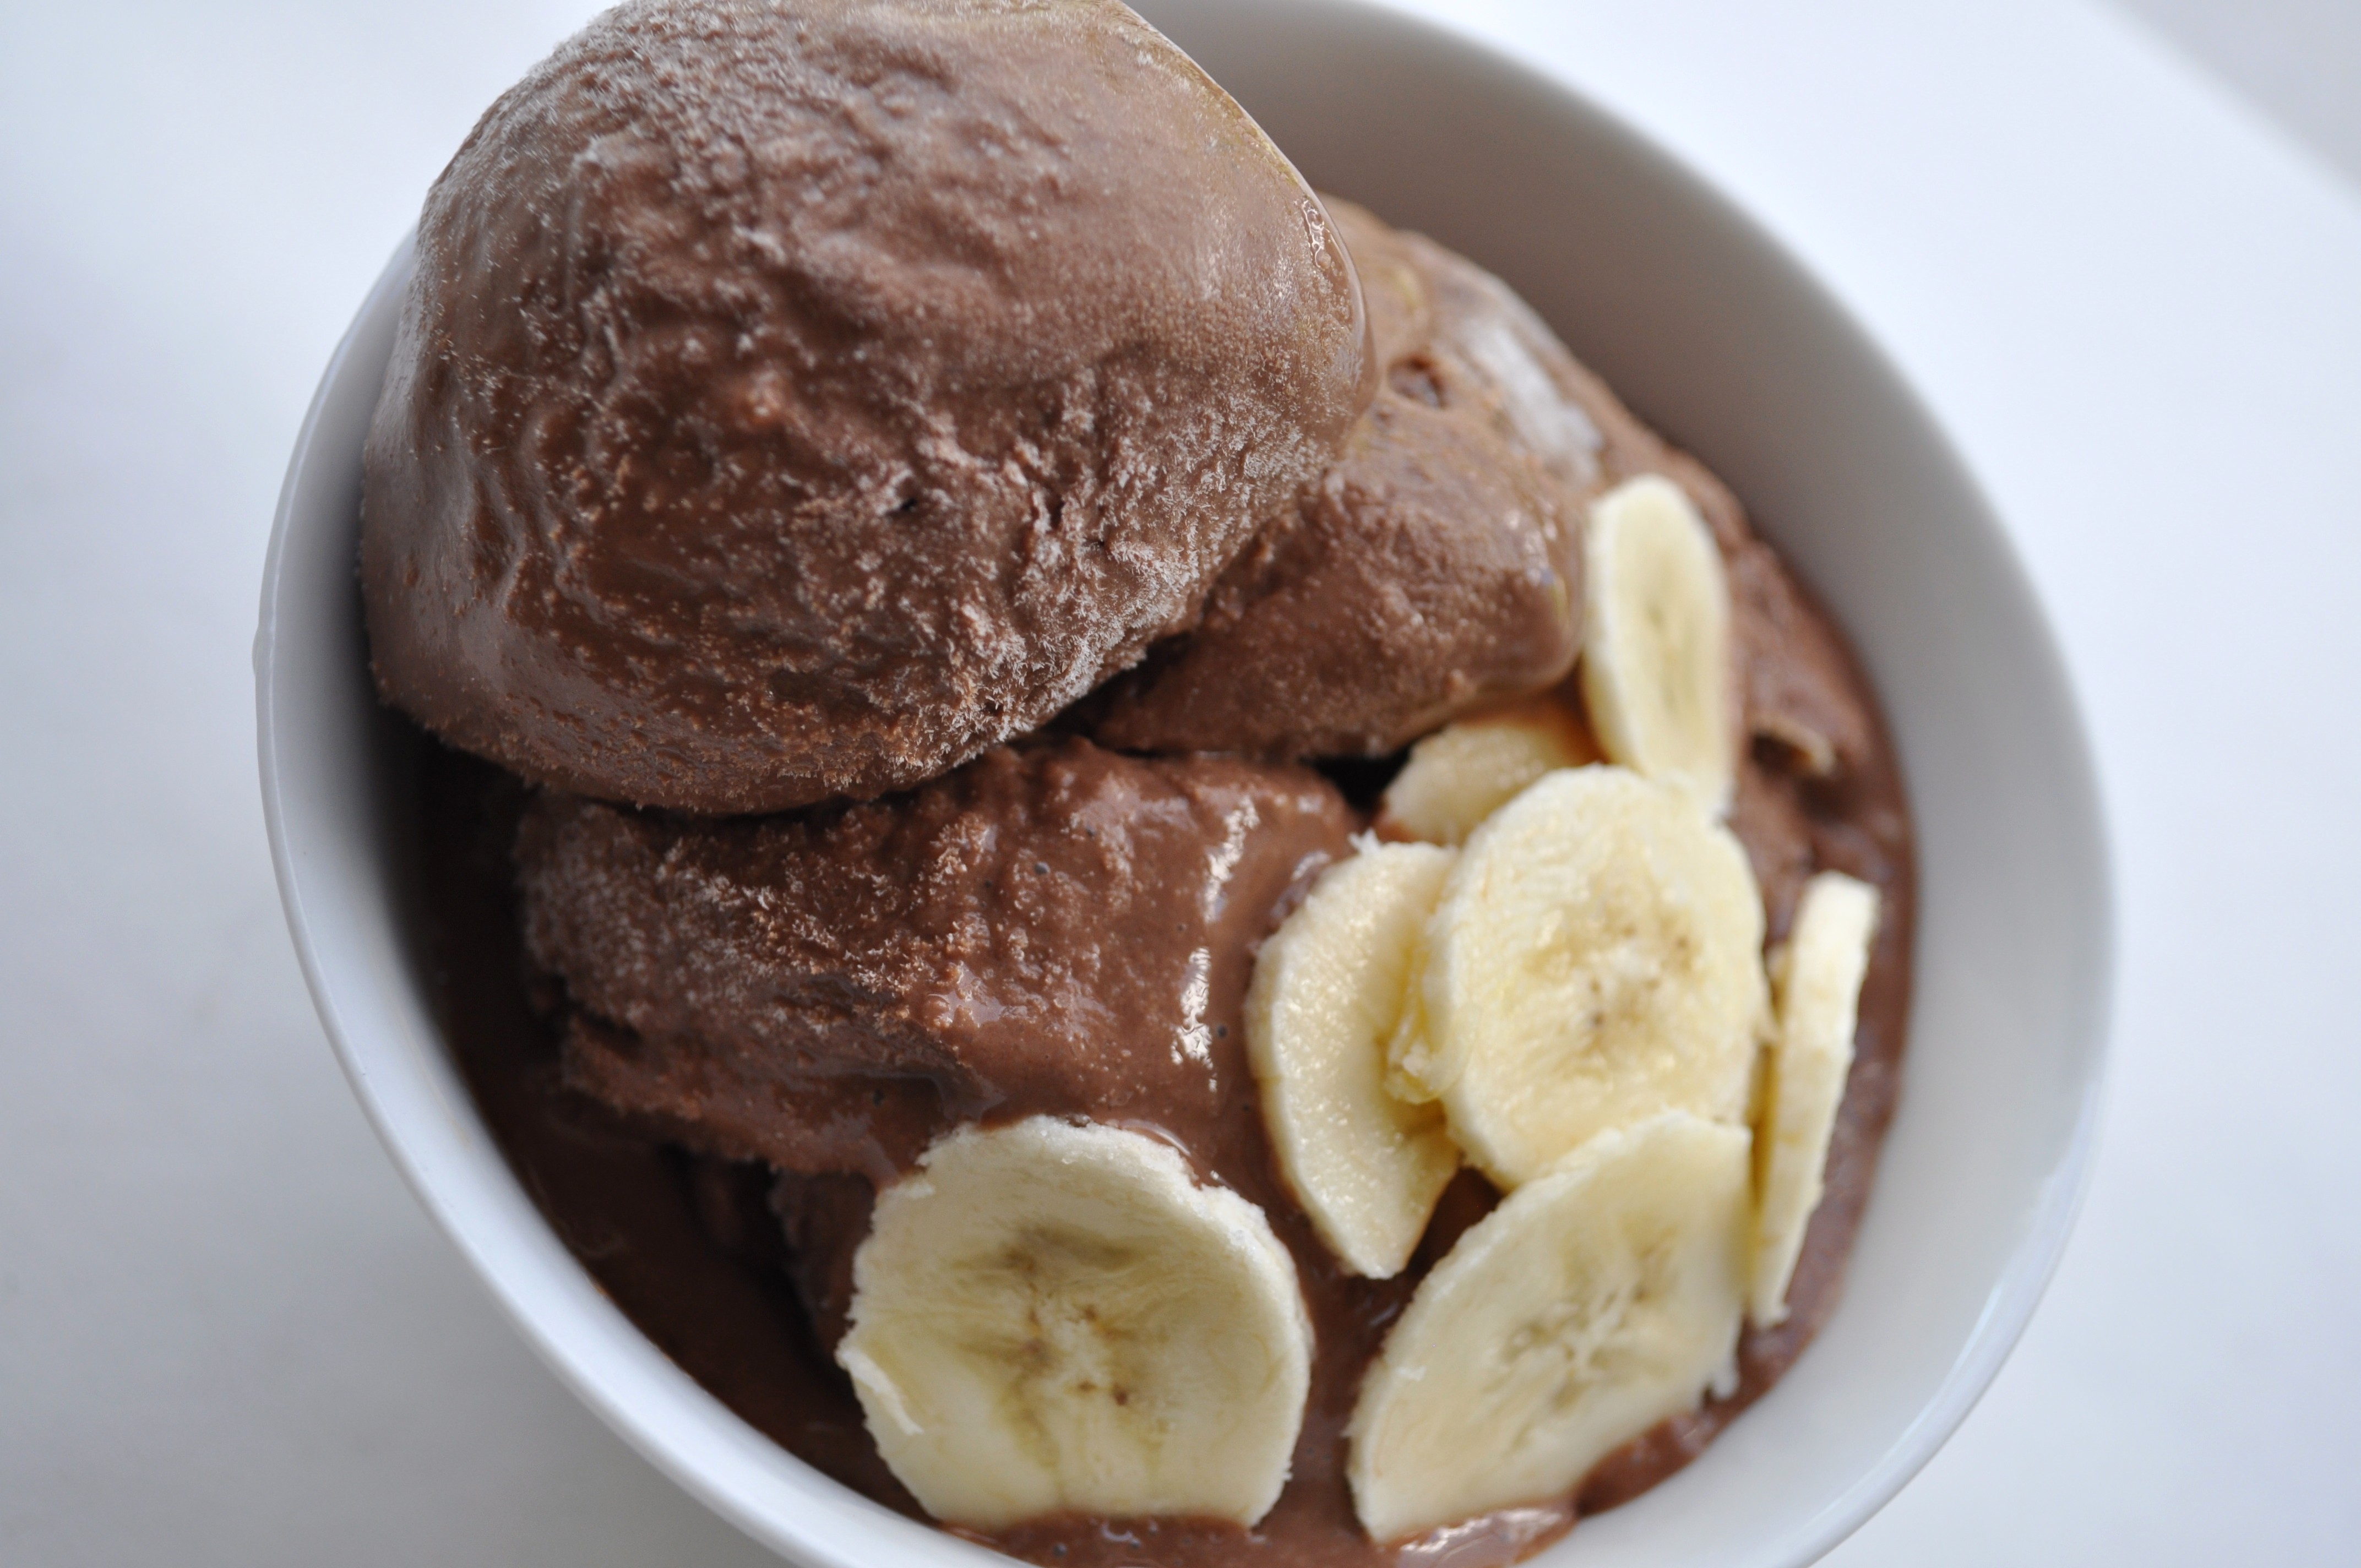 Chocolate Banana Ice Cream Recipe - How to Make Chocolate Banana Ice Cream